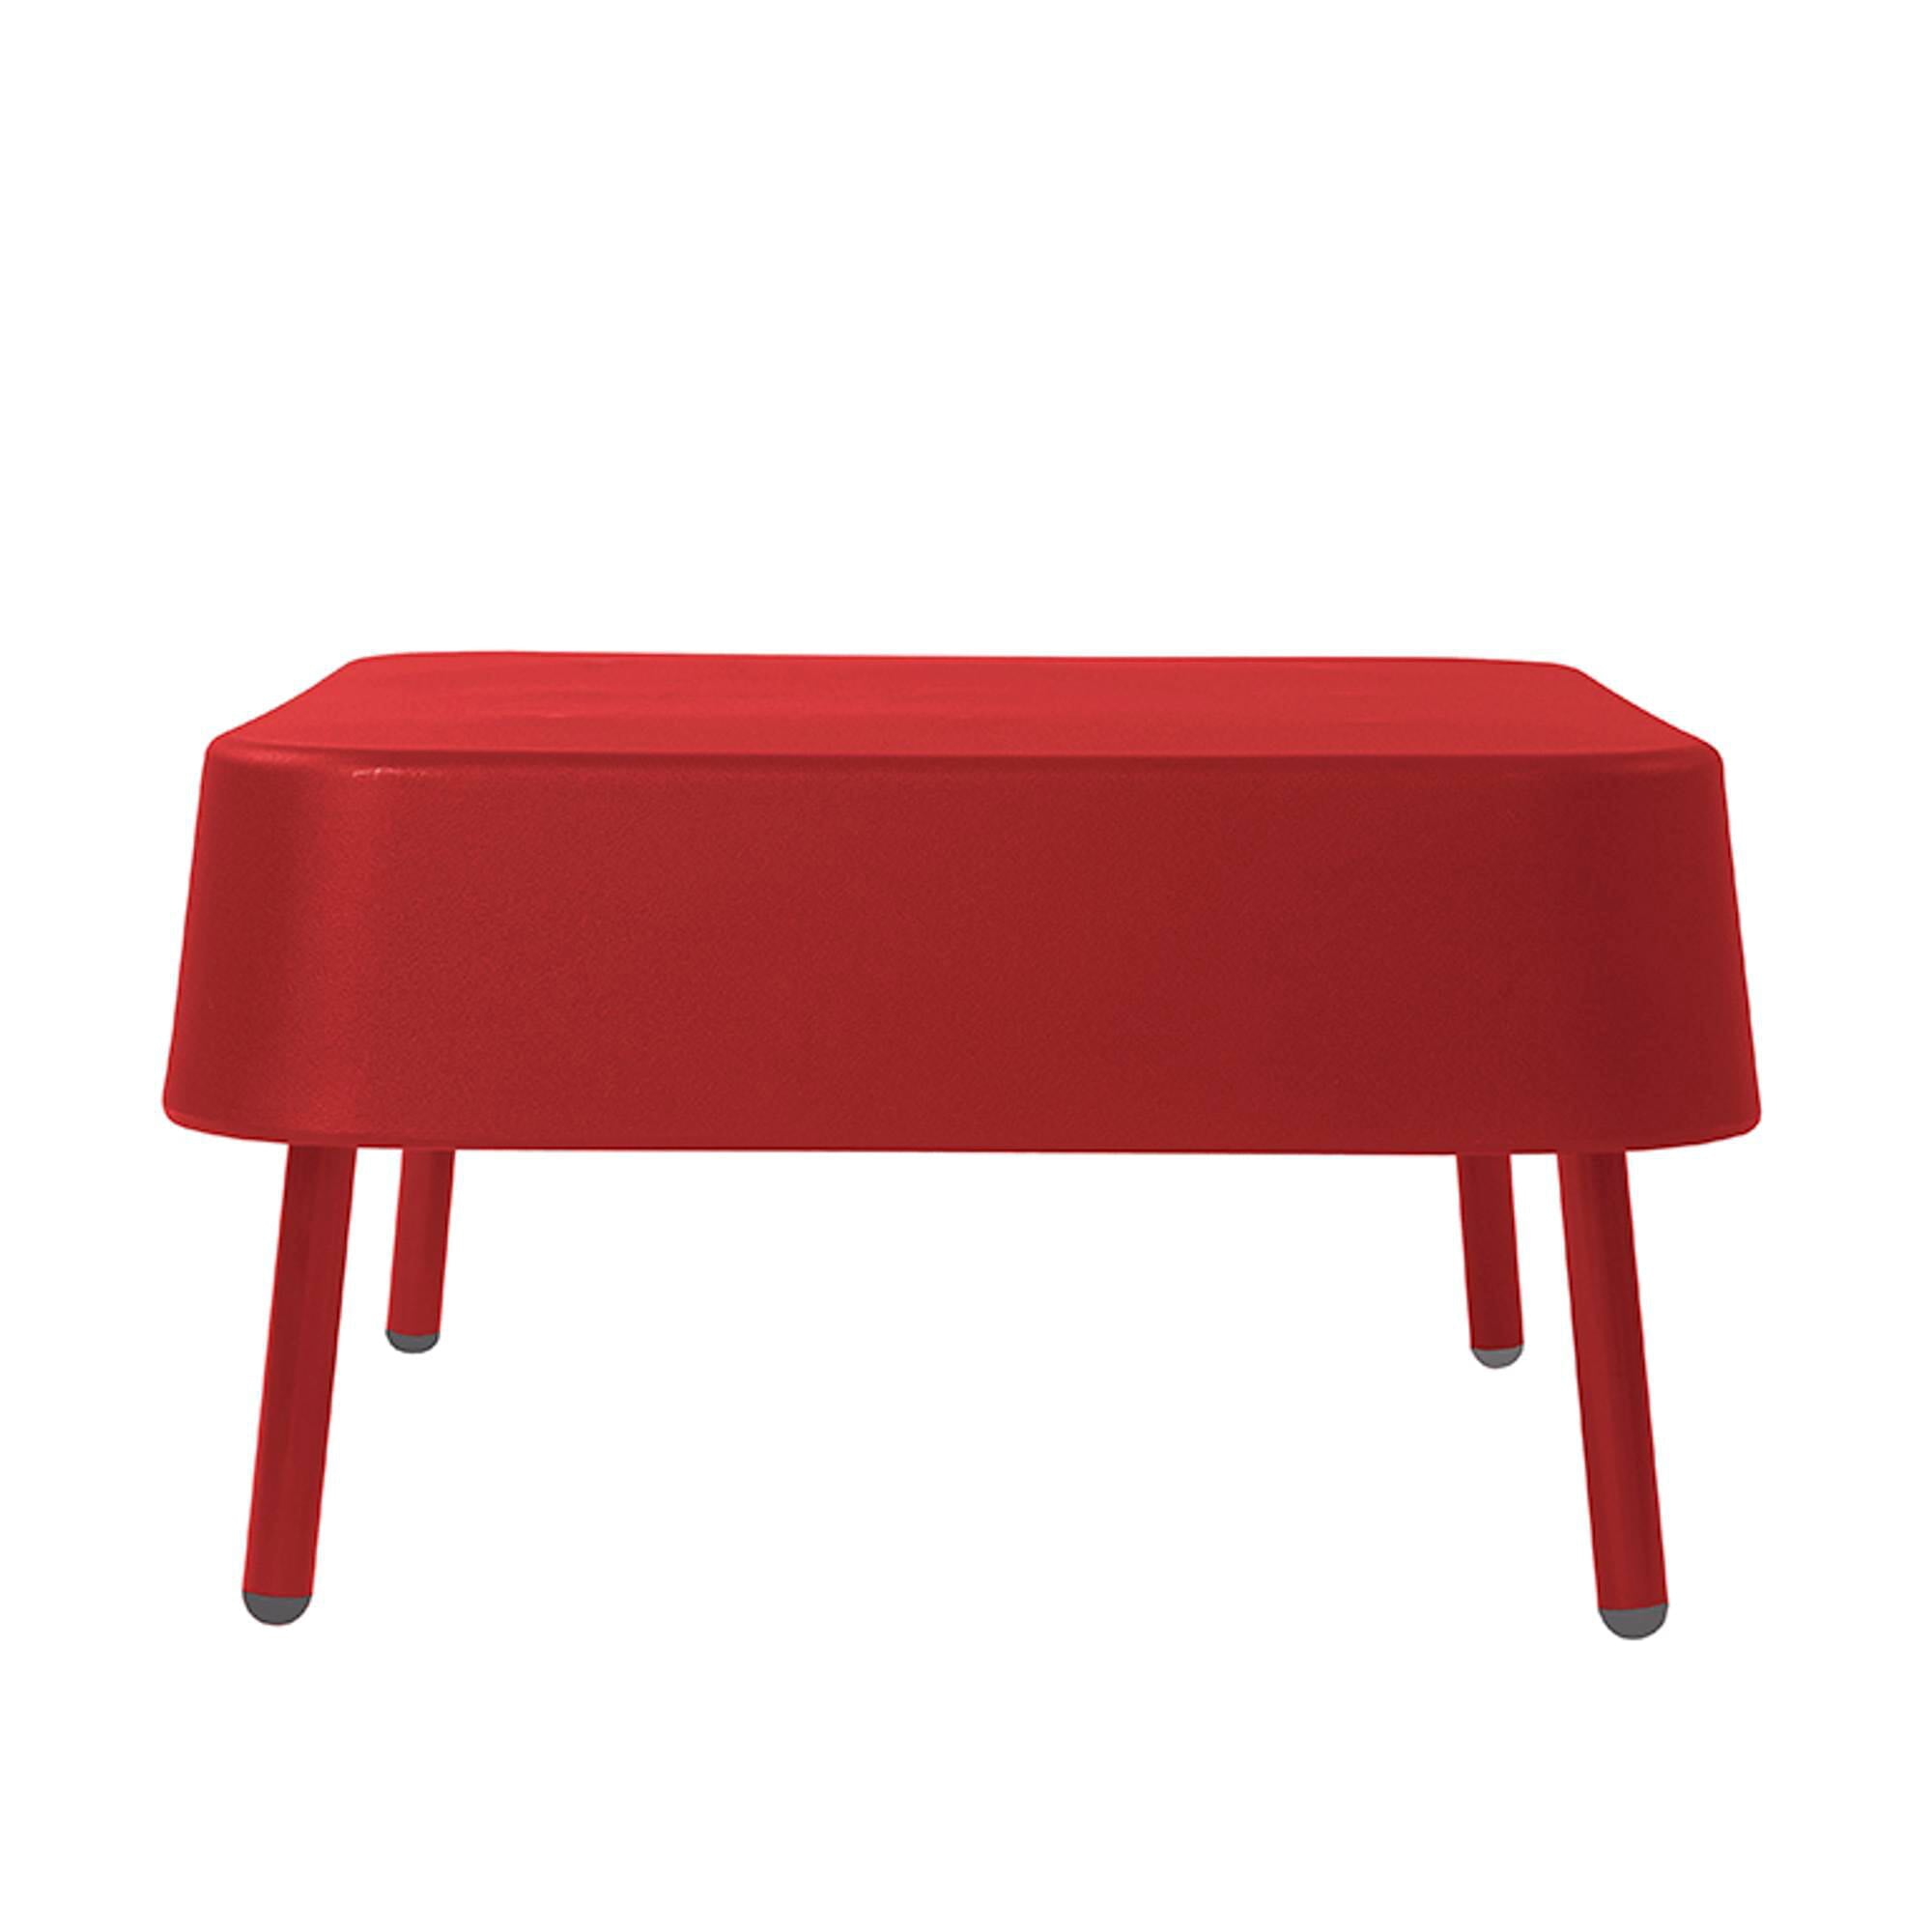 Bob voetenbank tafel 57x57 rood